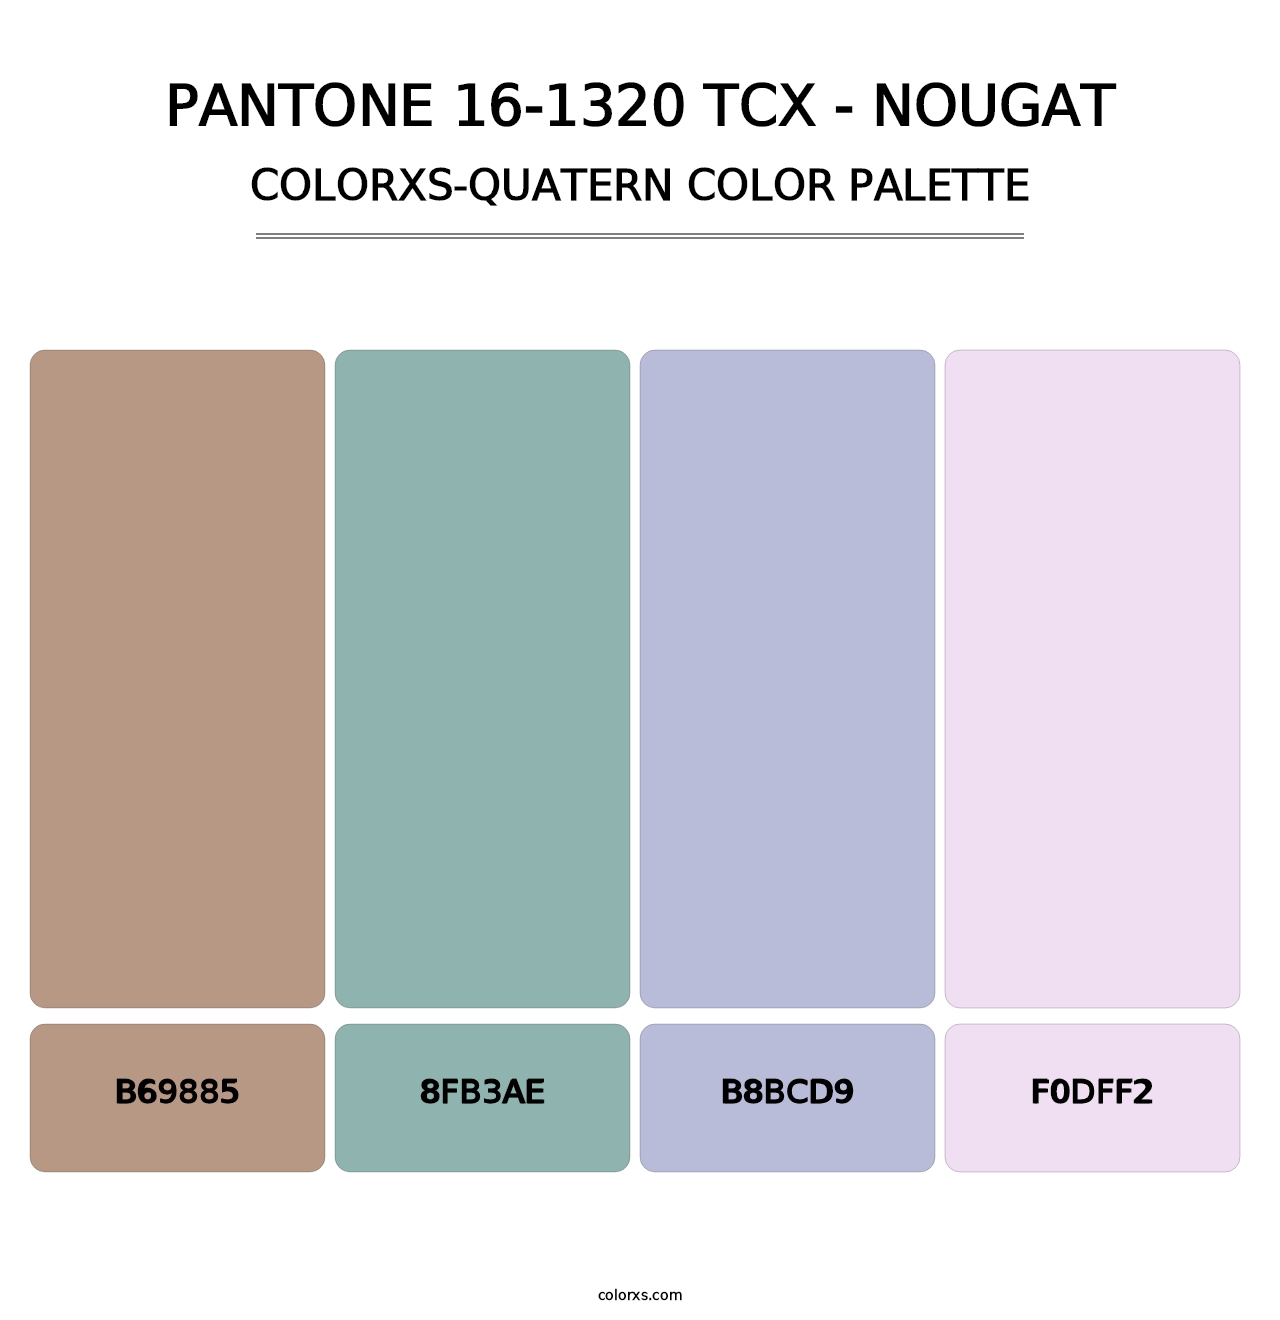 PANTONE 16-1320 TCX - Nougat - Colorxs Quatern Palette